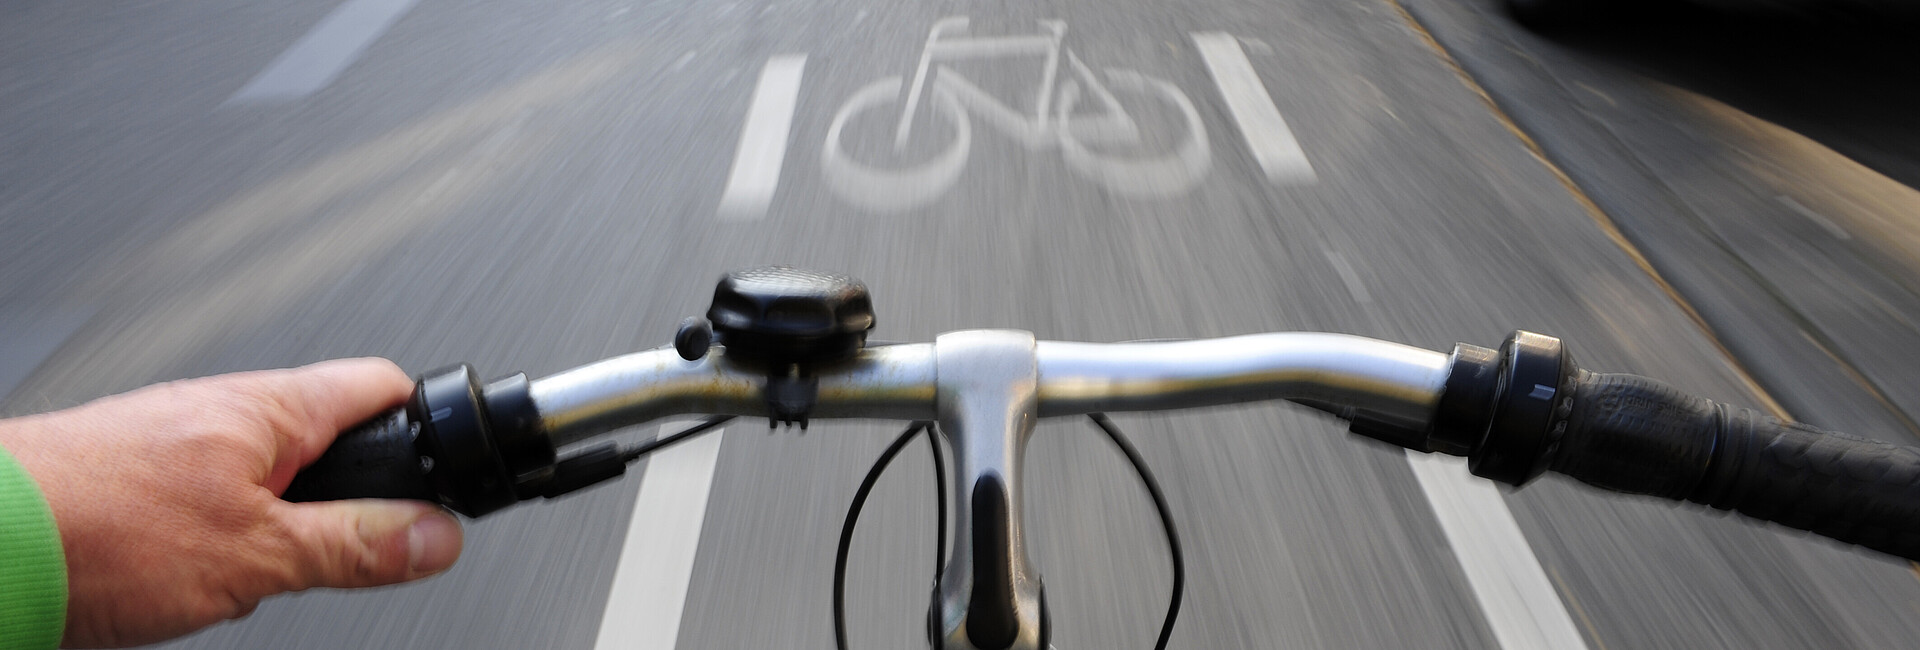 Blick über den Lenker:Fahrrad in schneller Fahrt auf einem Fahrradweg